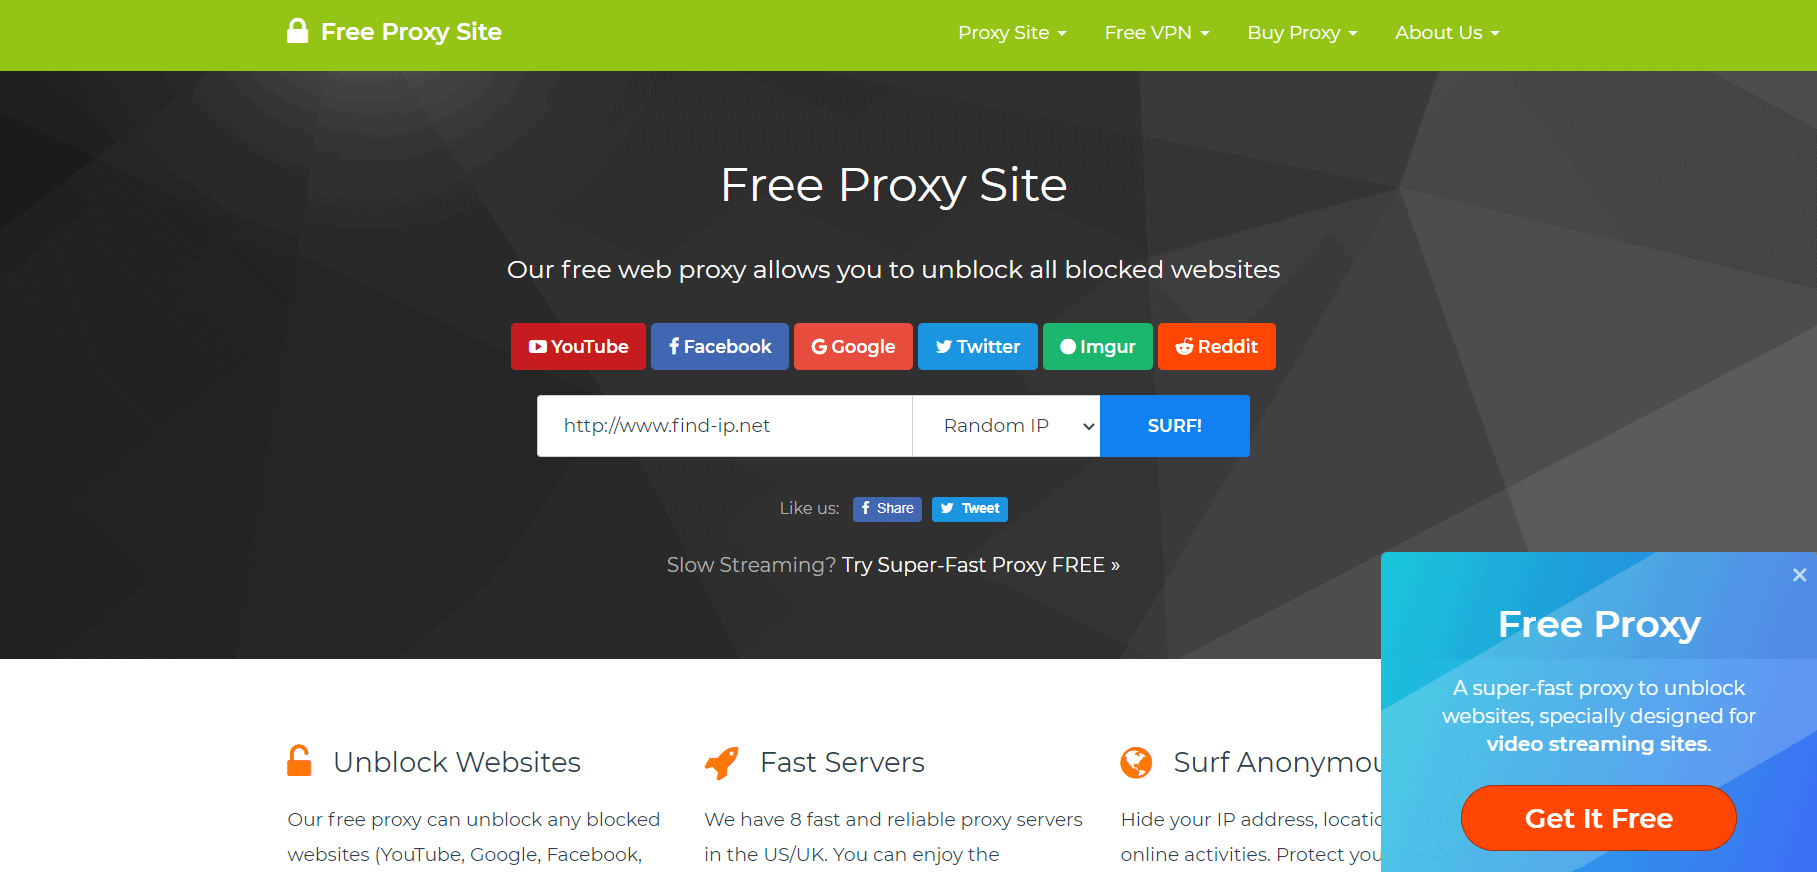 FreeProxy